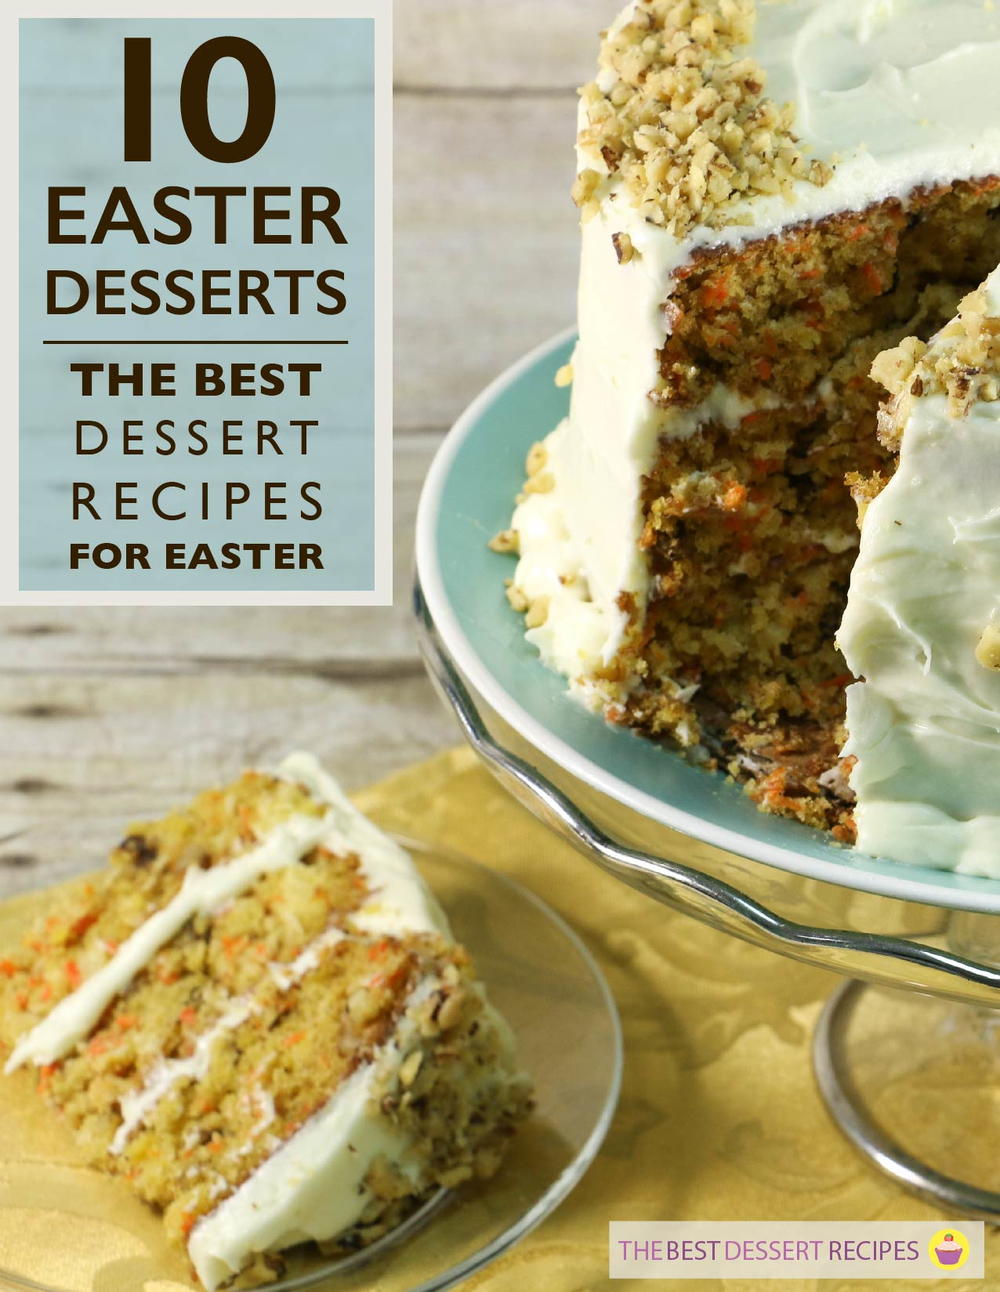 10 Easter Desserts The Best Dessert Recipes for Easter